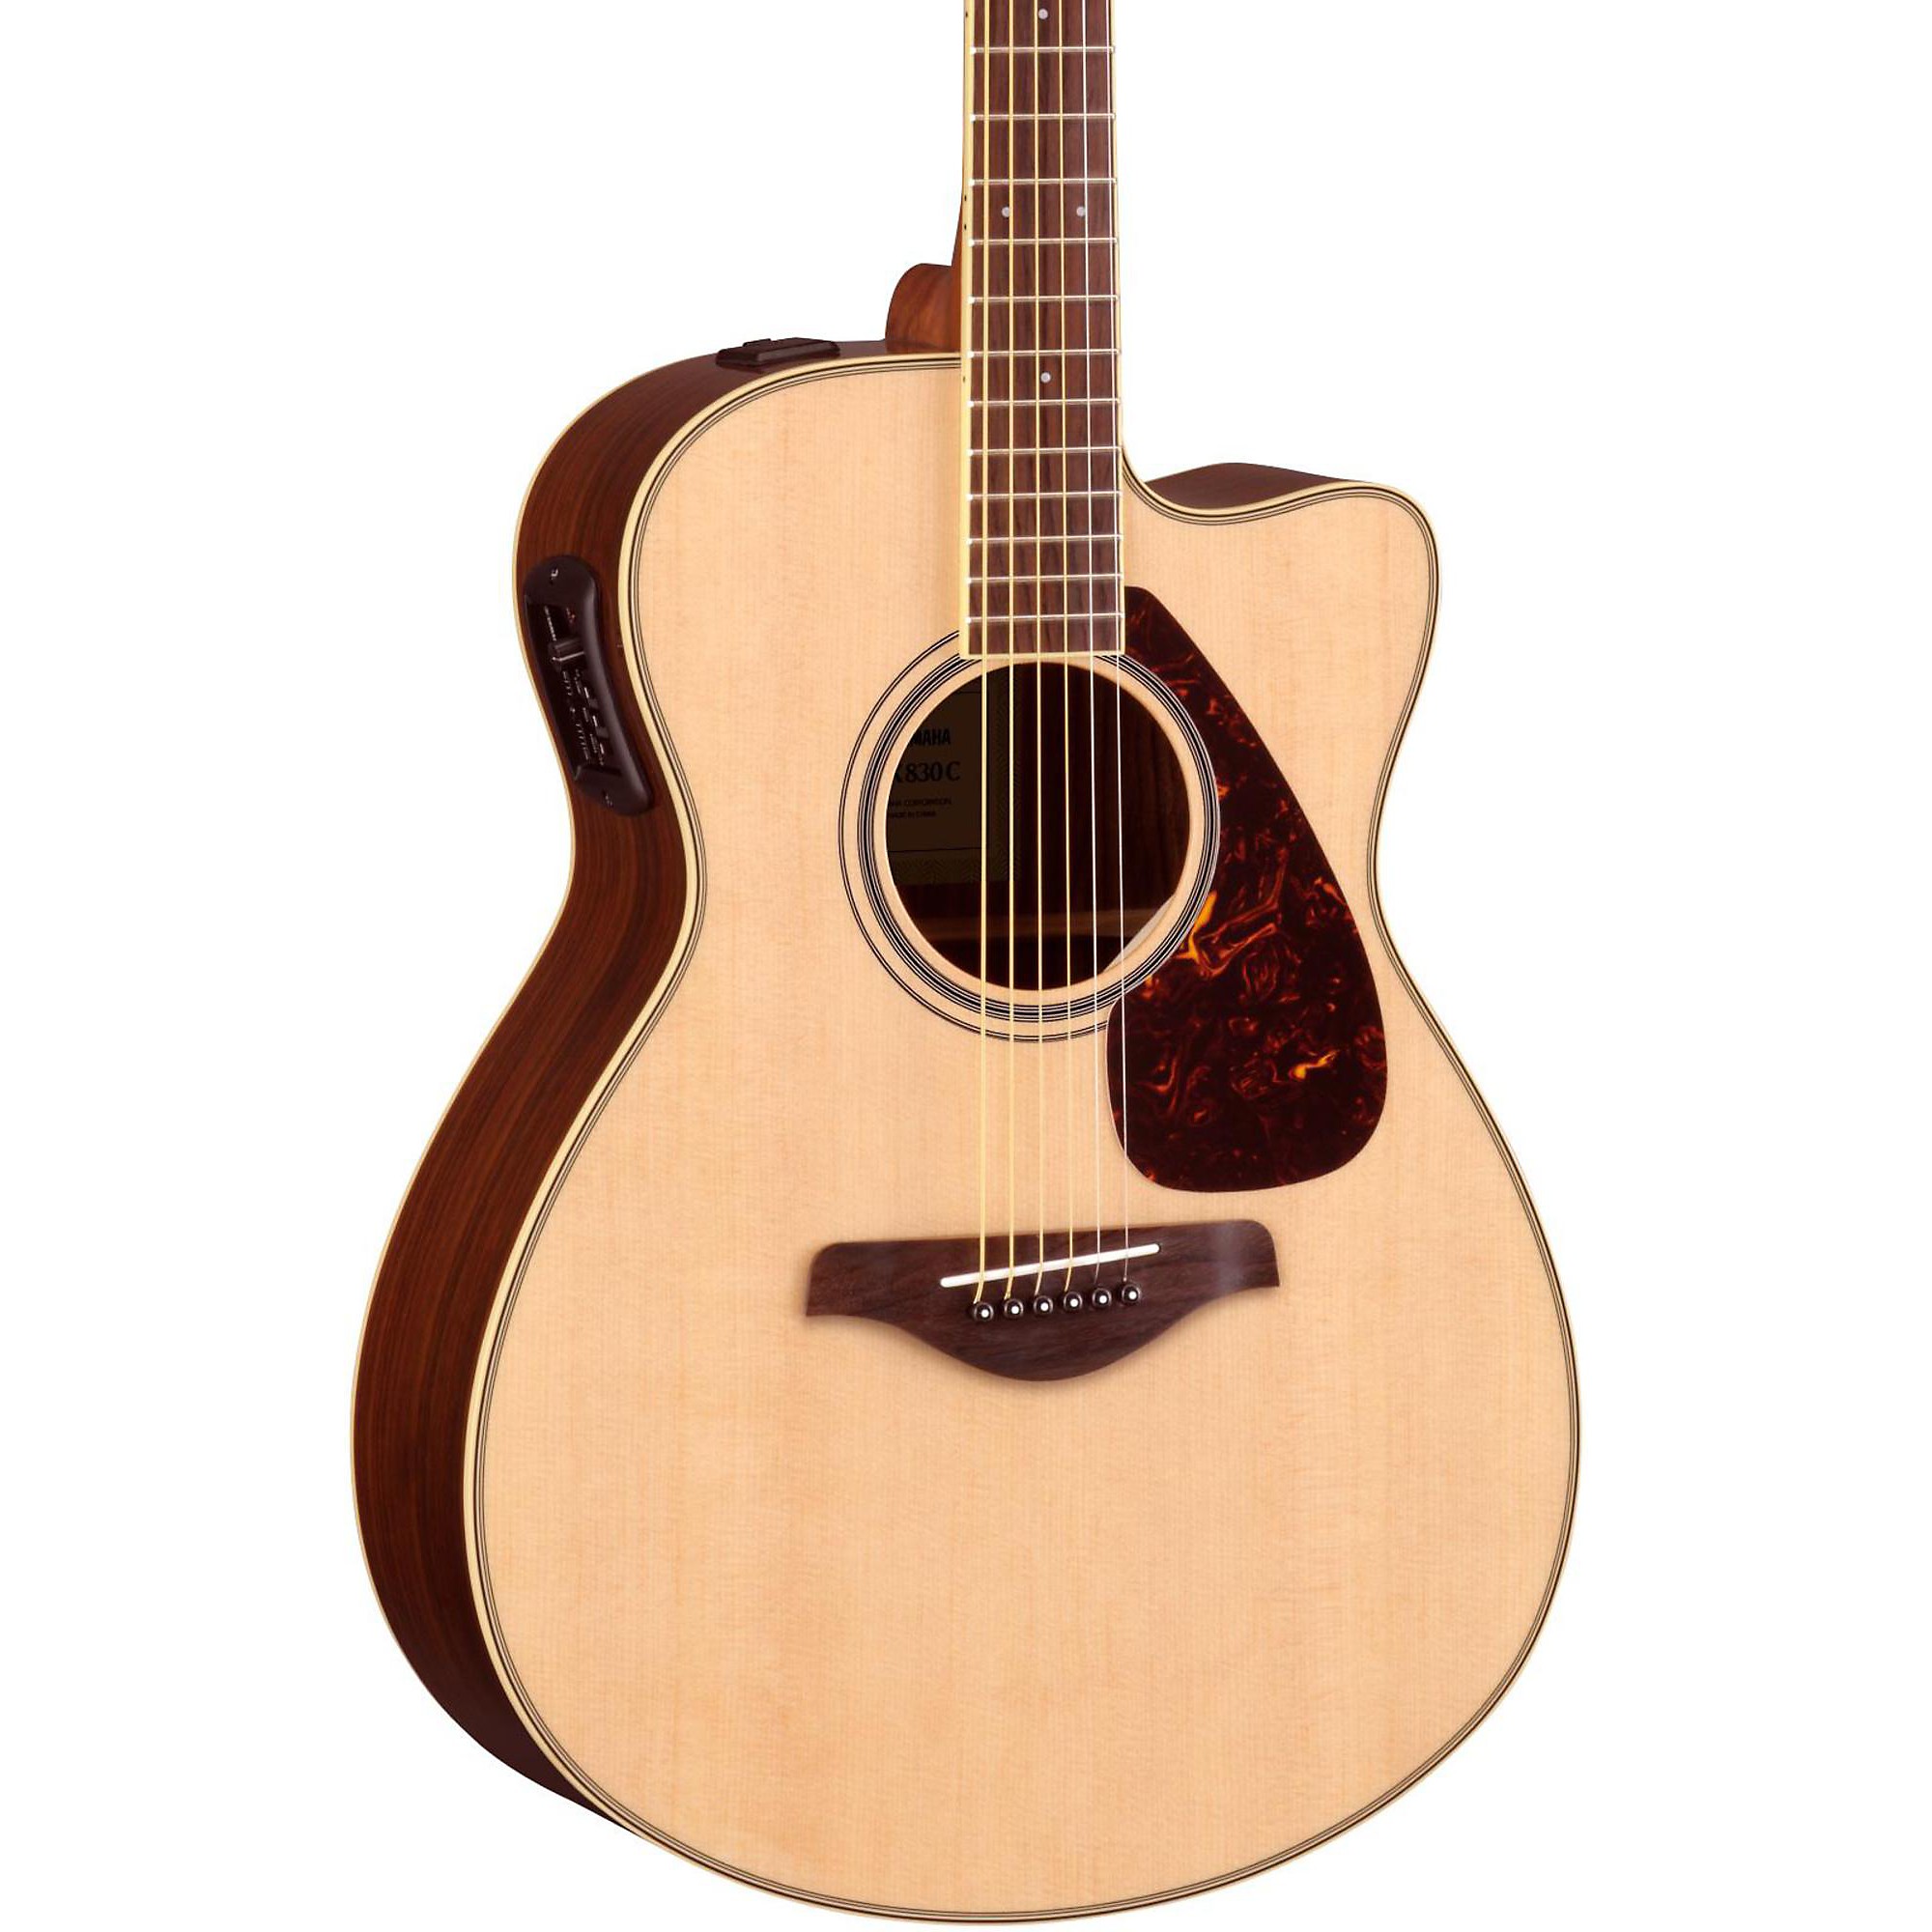 Акустически-электрическая гитара Yamaha FSX830C Natural